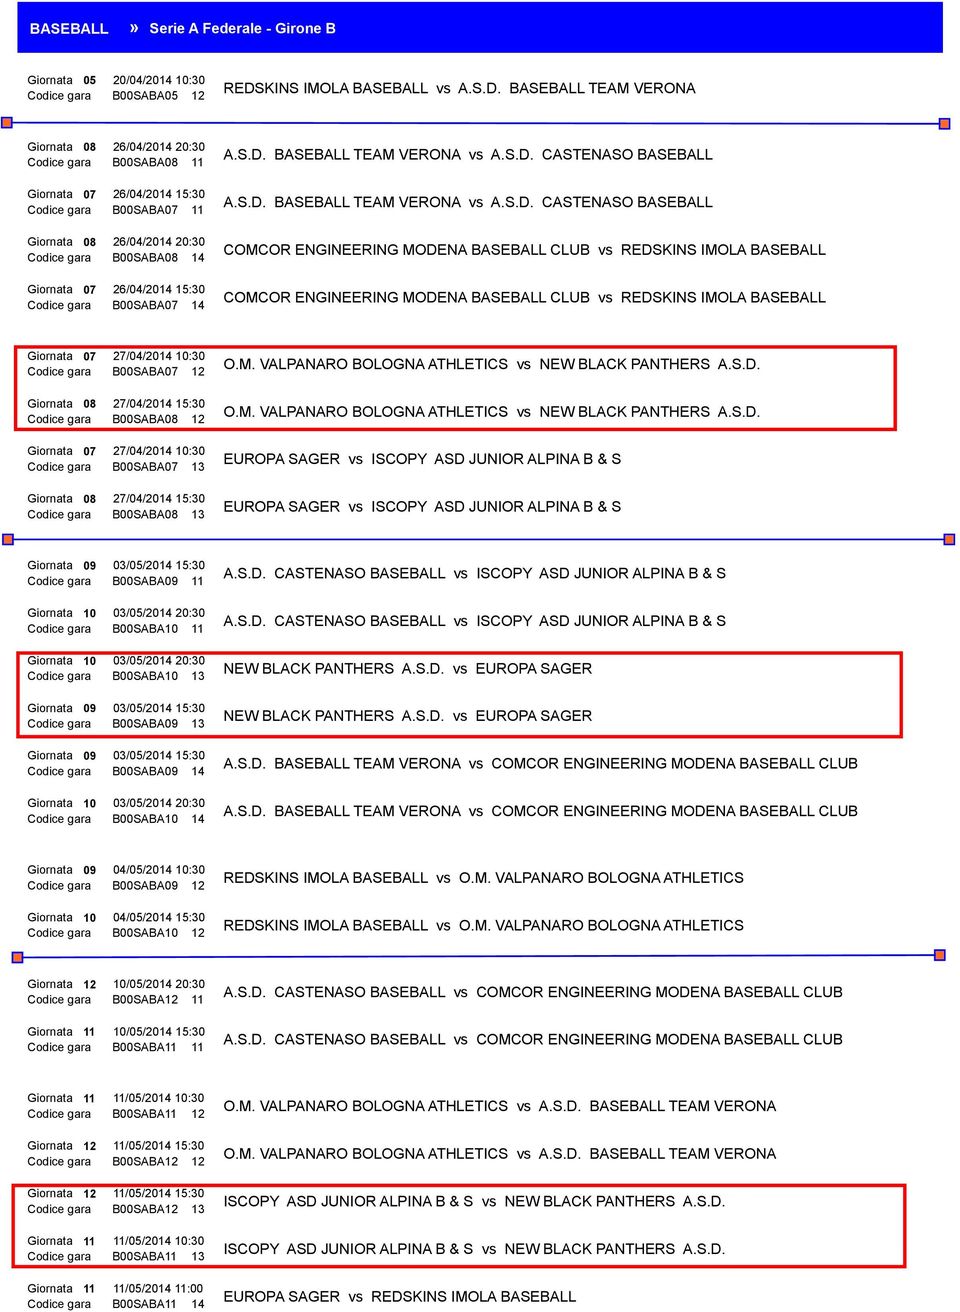 MODENA BASEBALL CLUB vs REDSKINS IMOLA BASEBALL 27/04/2014 10:30 B00SABA07 12 27/04/2014 15:30 B00SABA08 12 27/04/2014 10:30 B00SABA07 13 27/04/2014 15:30 B00SABA08 13 O.M. VALPANARO BOLOGNA ATHLETICS vs NEW BLACK PANTHERS A.